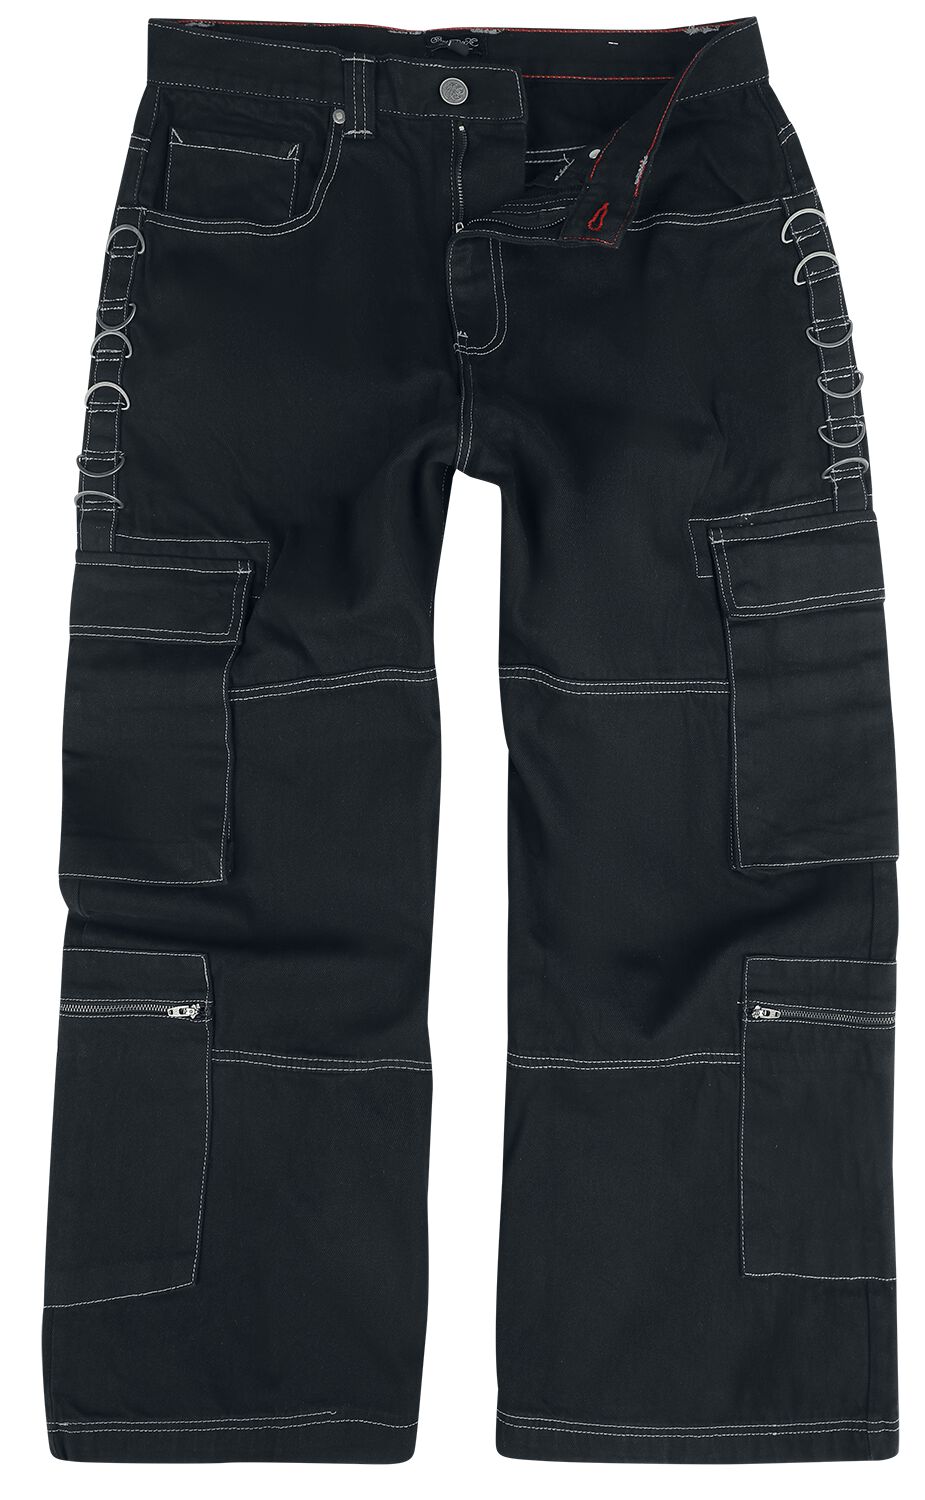 Chet Rock Jeans - Monaghan Utility Jeans - W30L32 bis W38L34 - für Männer - Größe W30L34 - schwarz